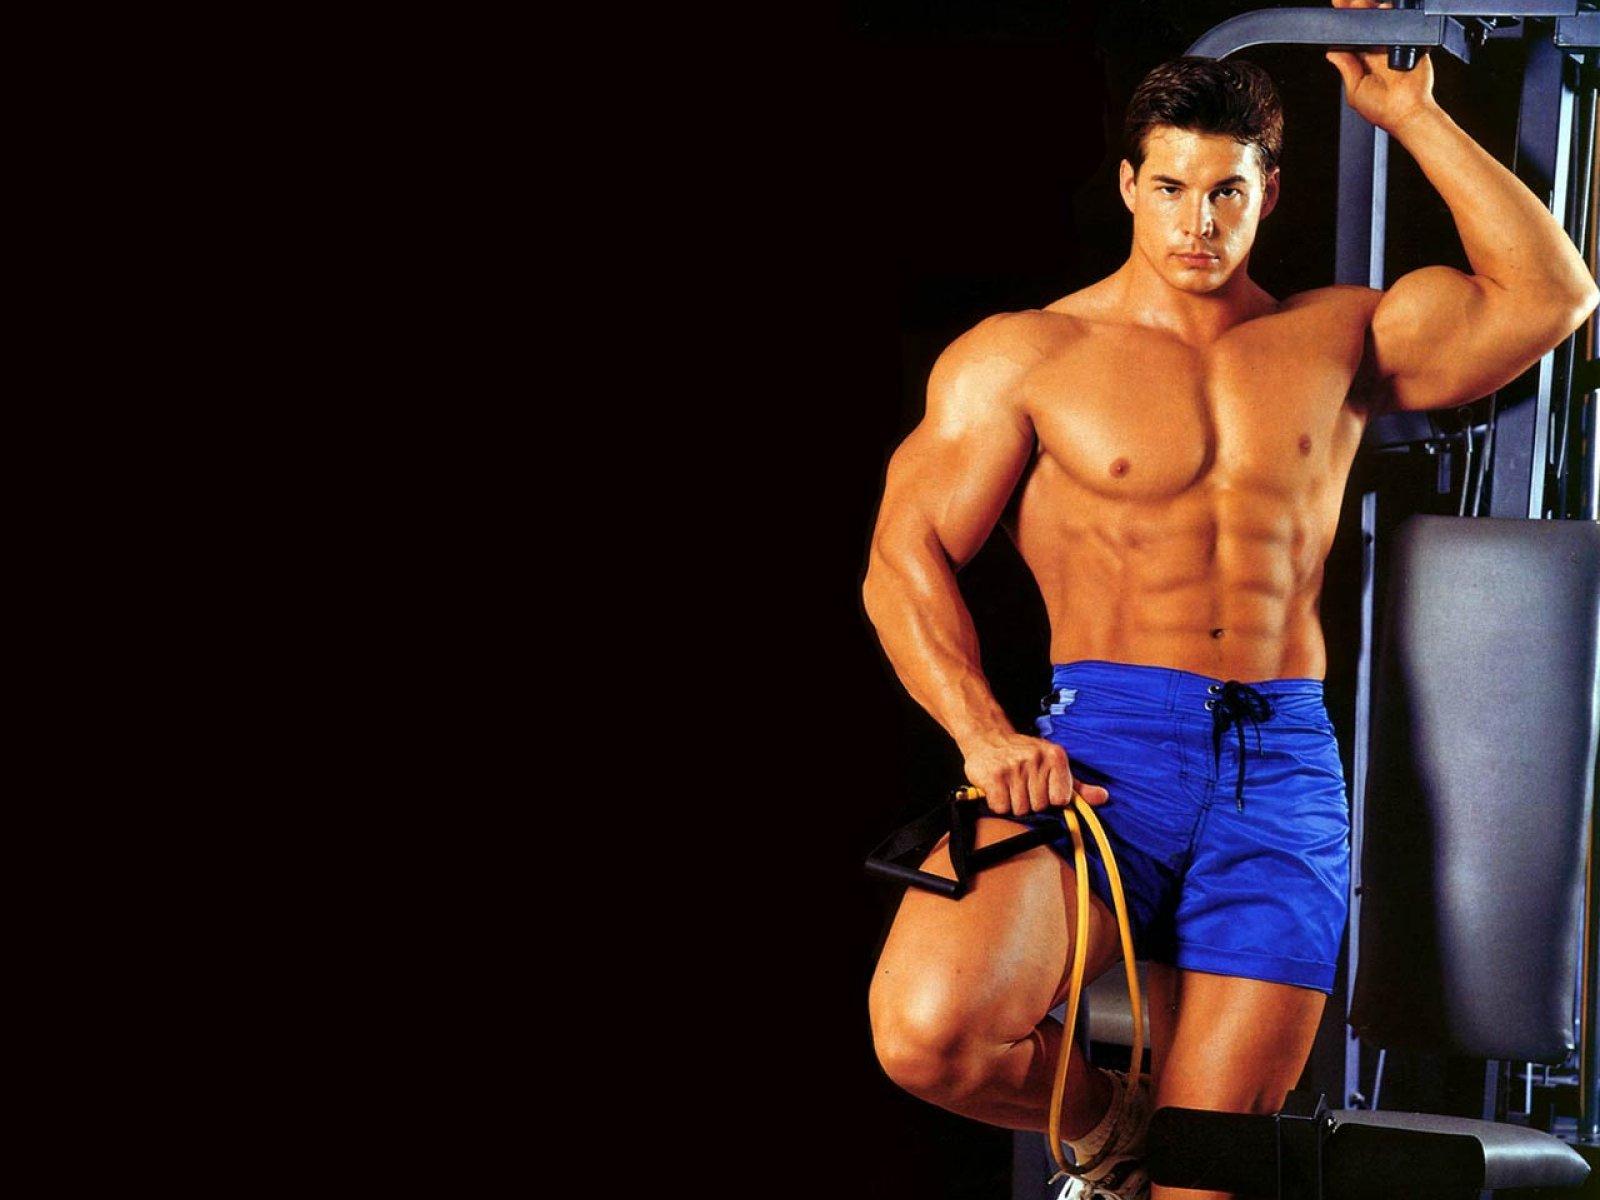 Men Body Fitness | Download Free Desktop Wallpaper Images & Pictures